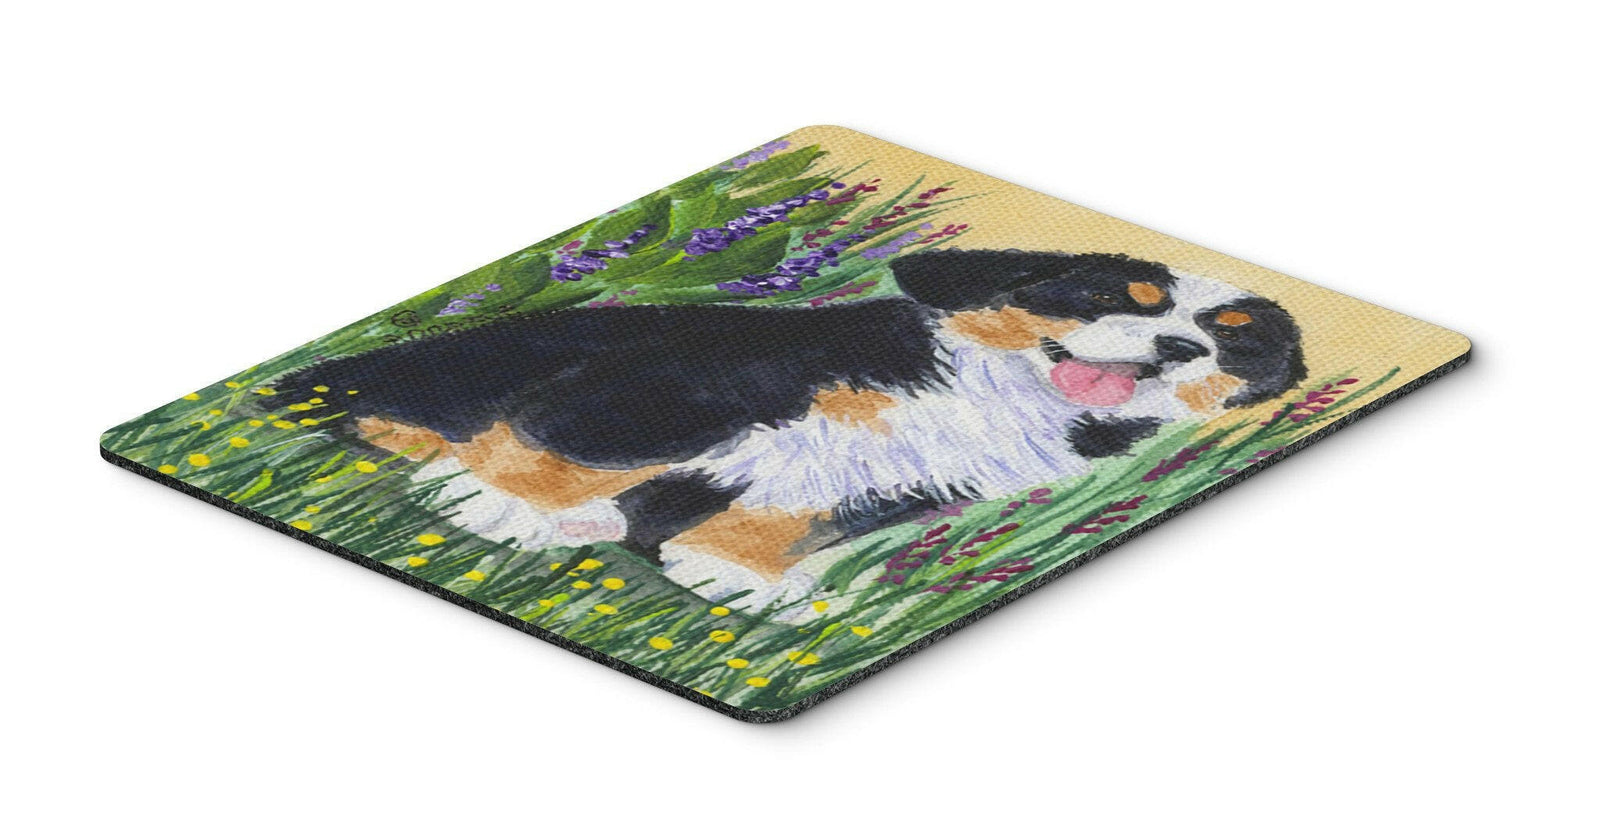 Bernese Mountain Dog Mouse Pad / Hot Pad / Trivet by Caroline's Treasures